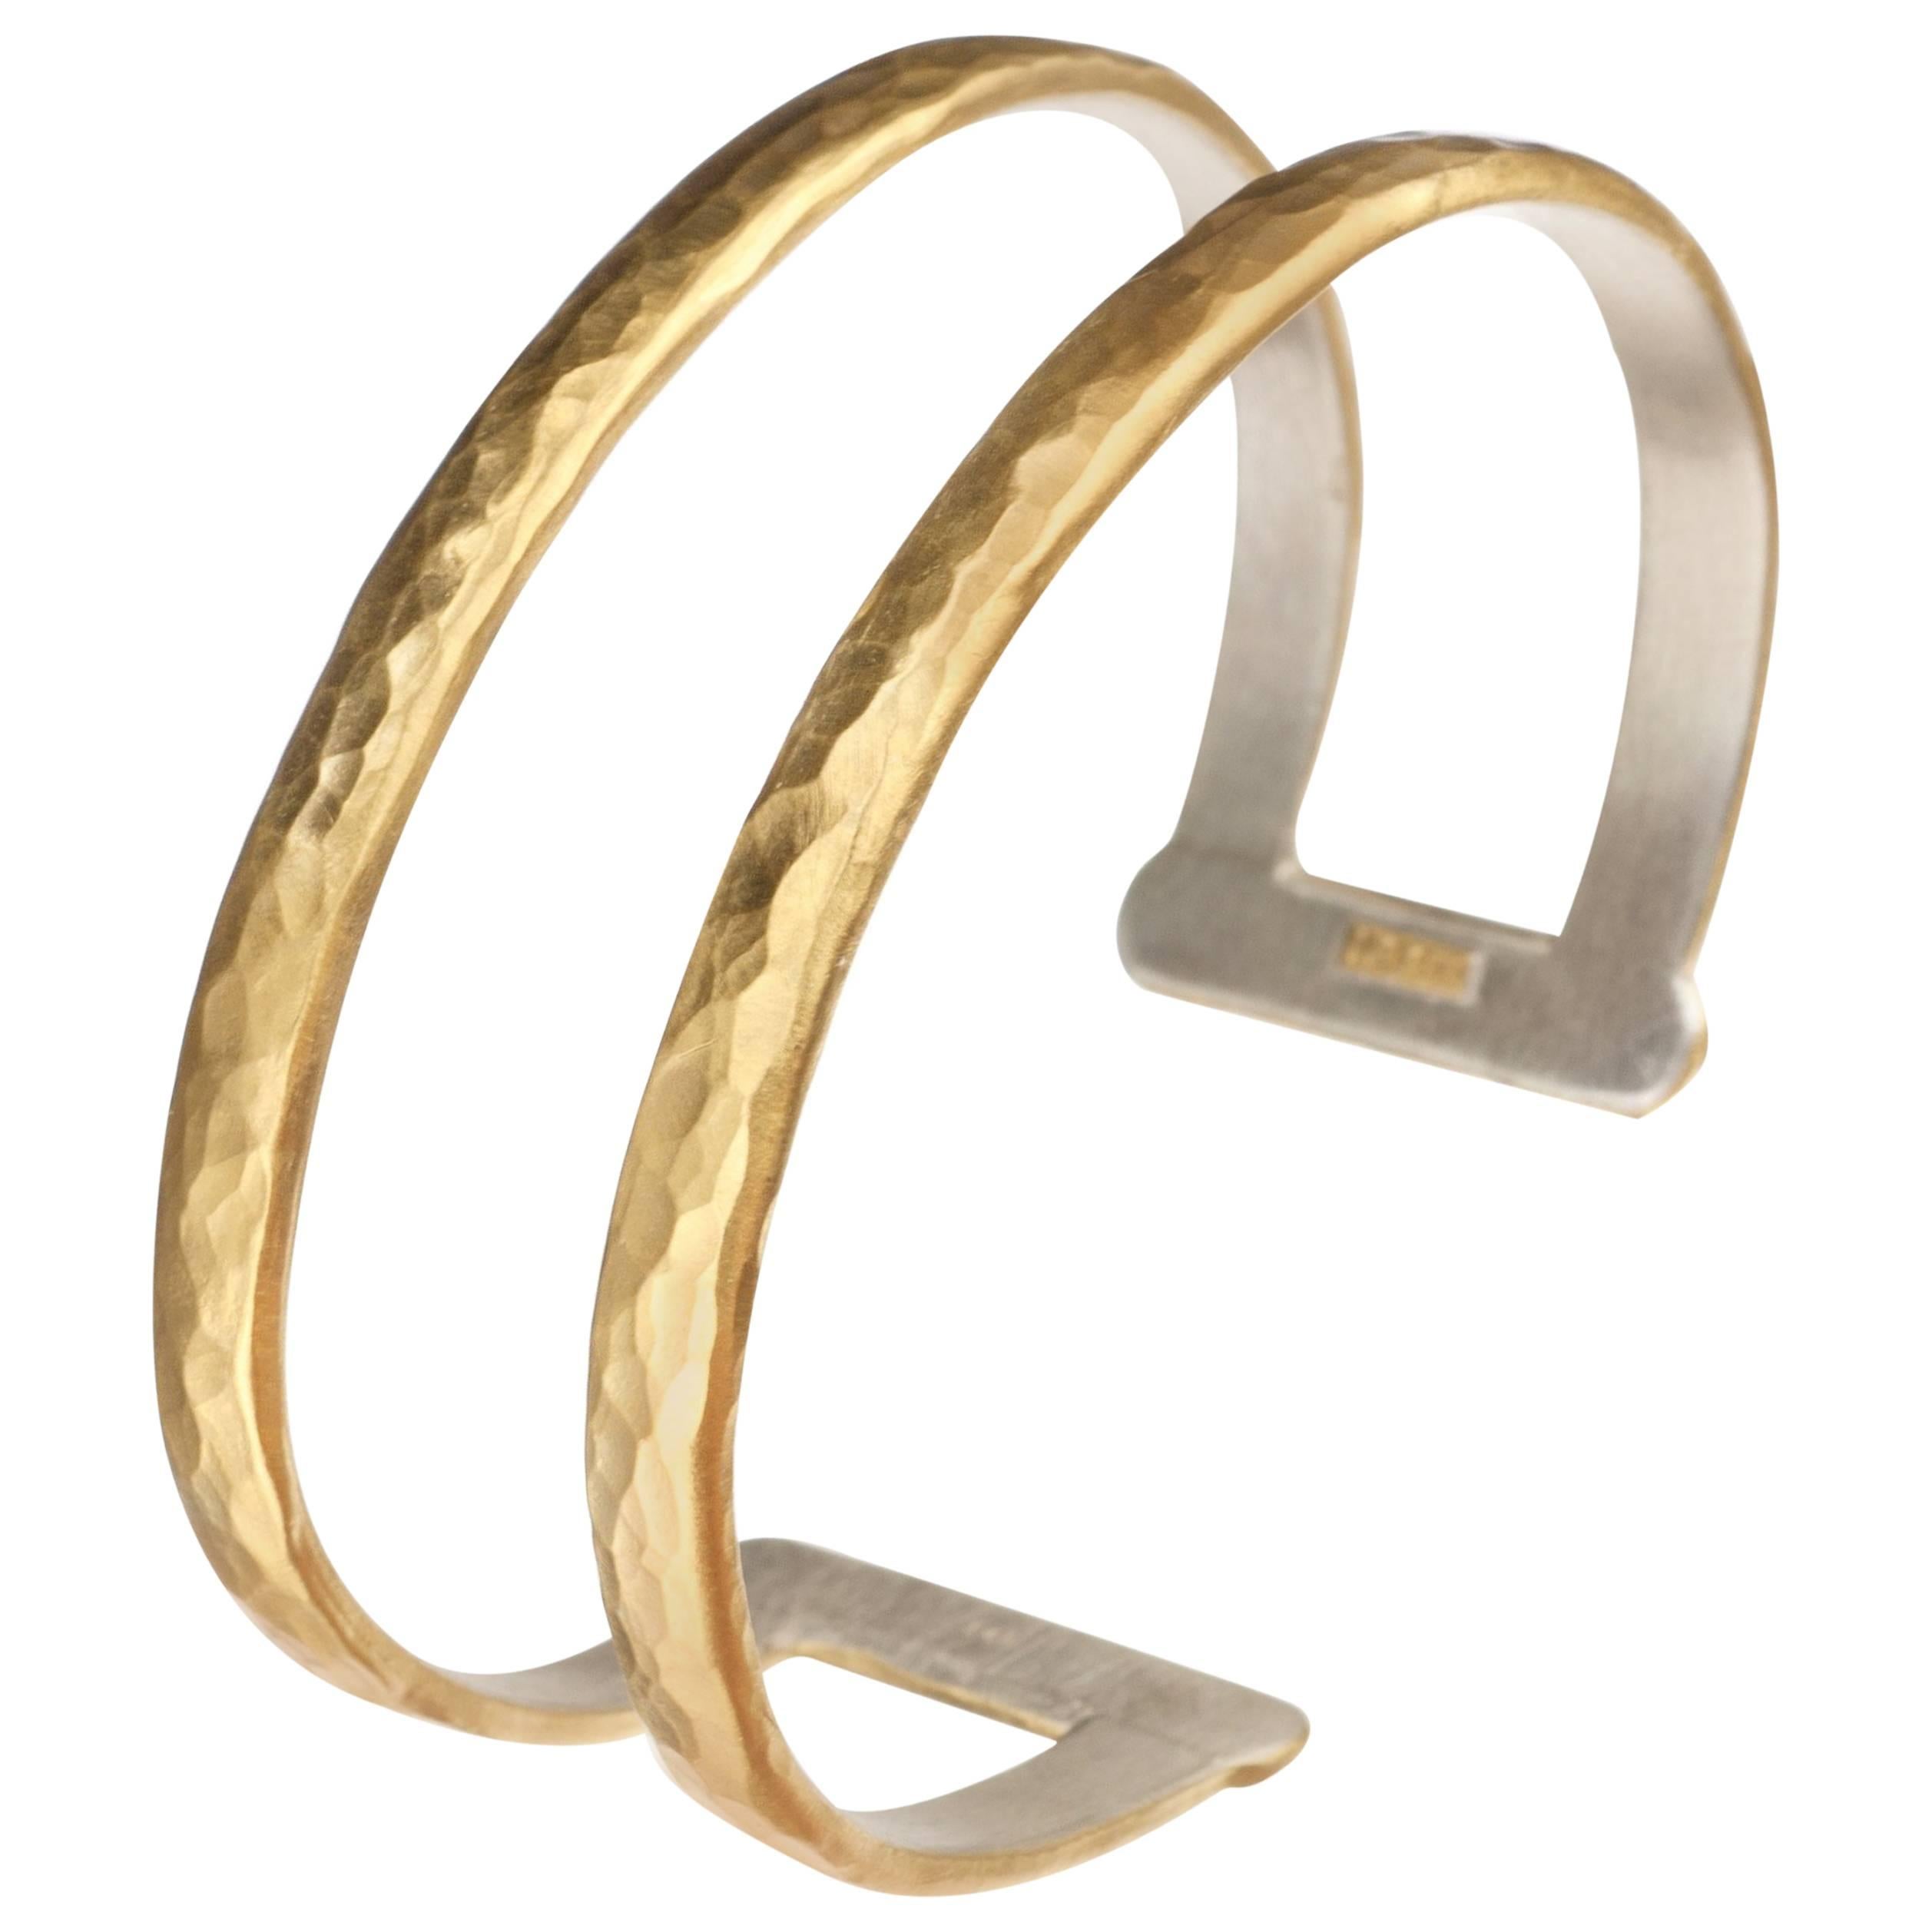 Lika Behar “Stockholm” Two-Tier Cuff Bracelet in 24 Karat Yellow Gold For Sale